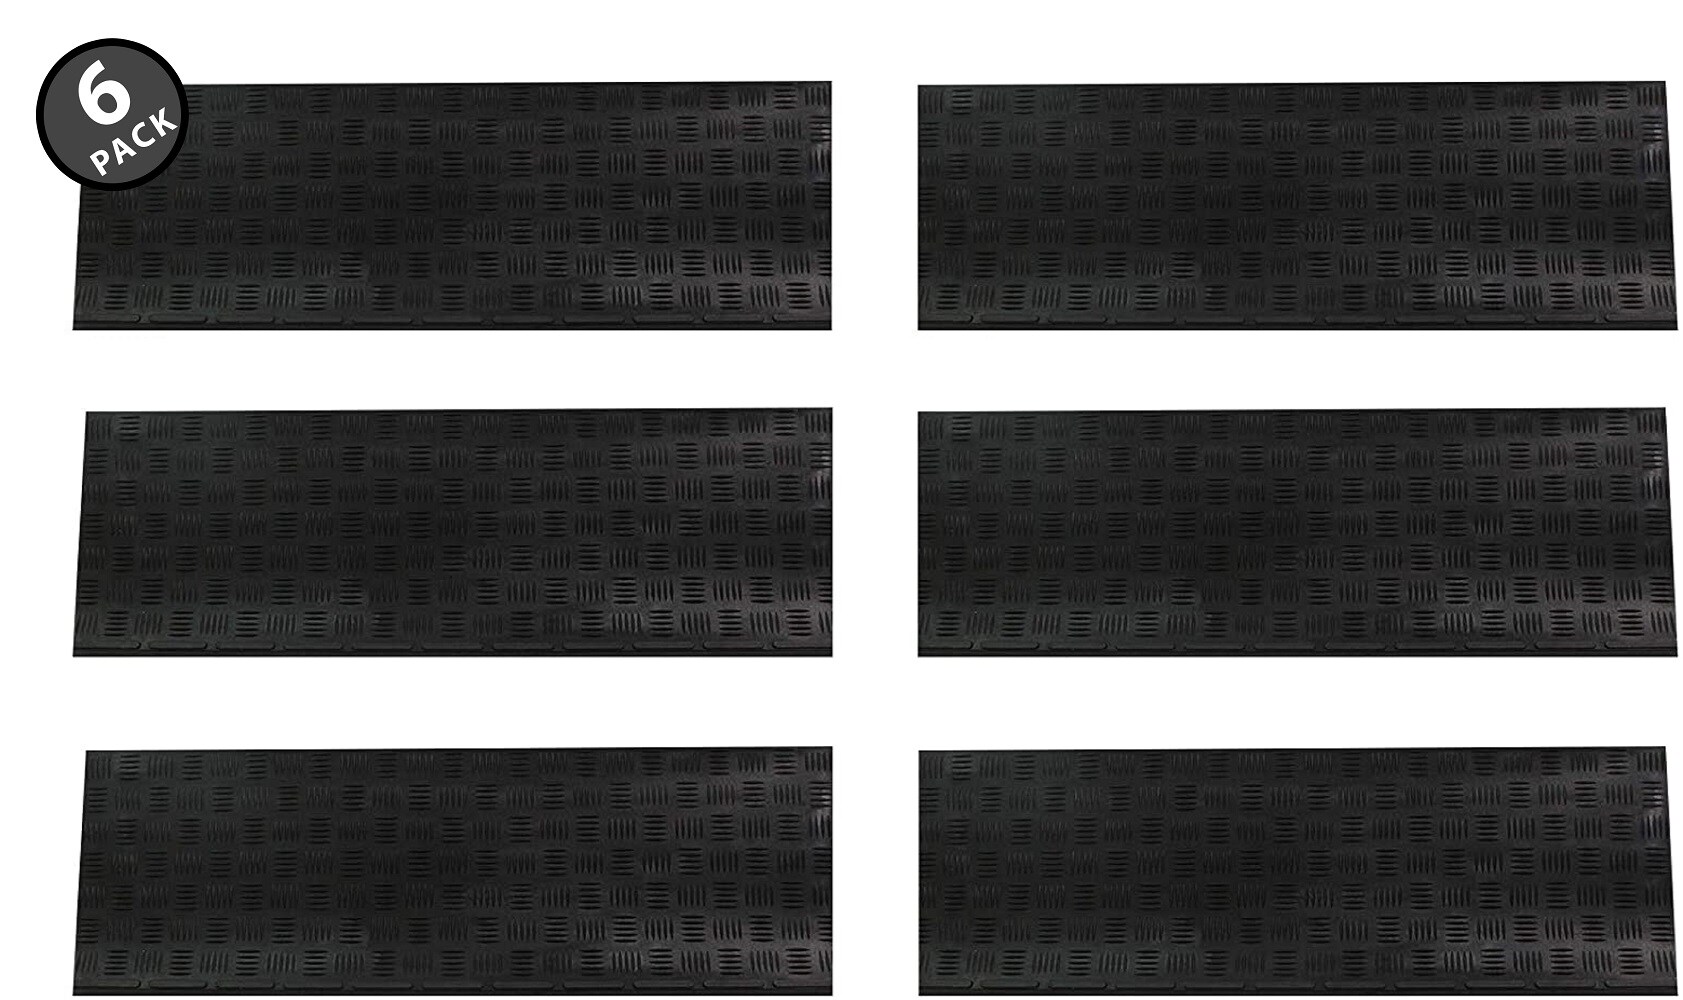 Envelor Interlocking Anti Fatigue Rubber Floor Mat, 4 Pack, 36 in. x 36 in. - Black